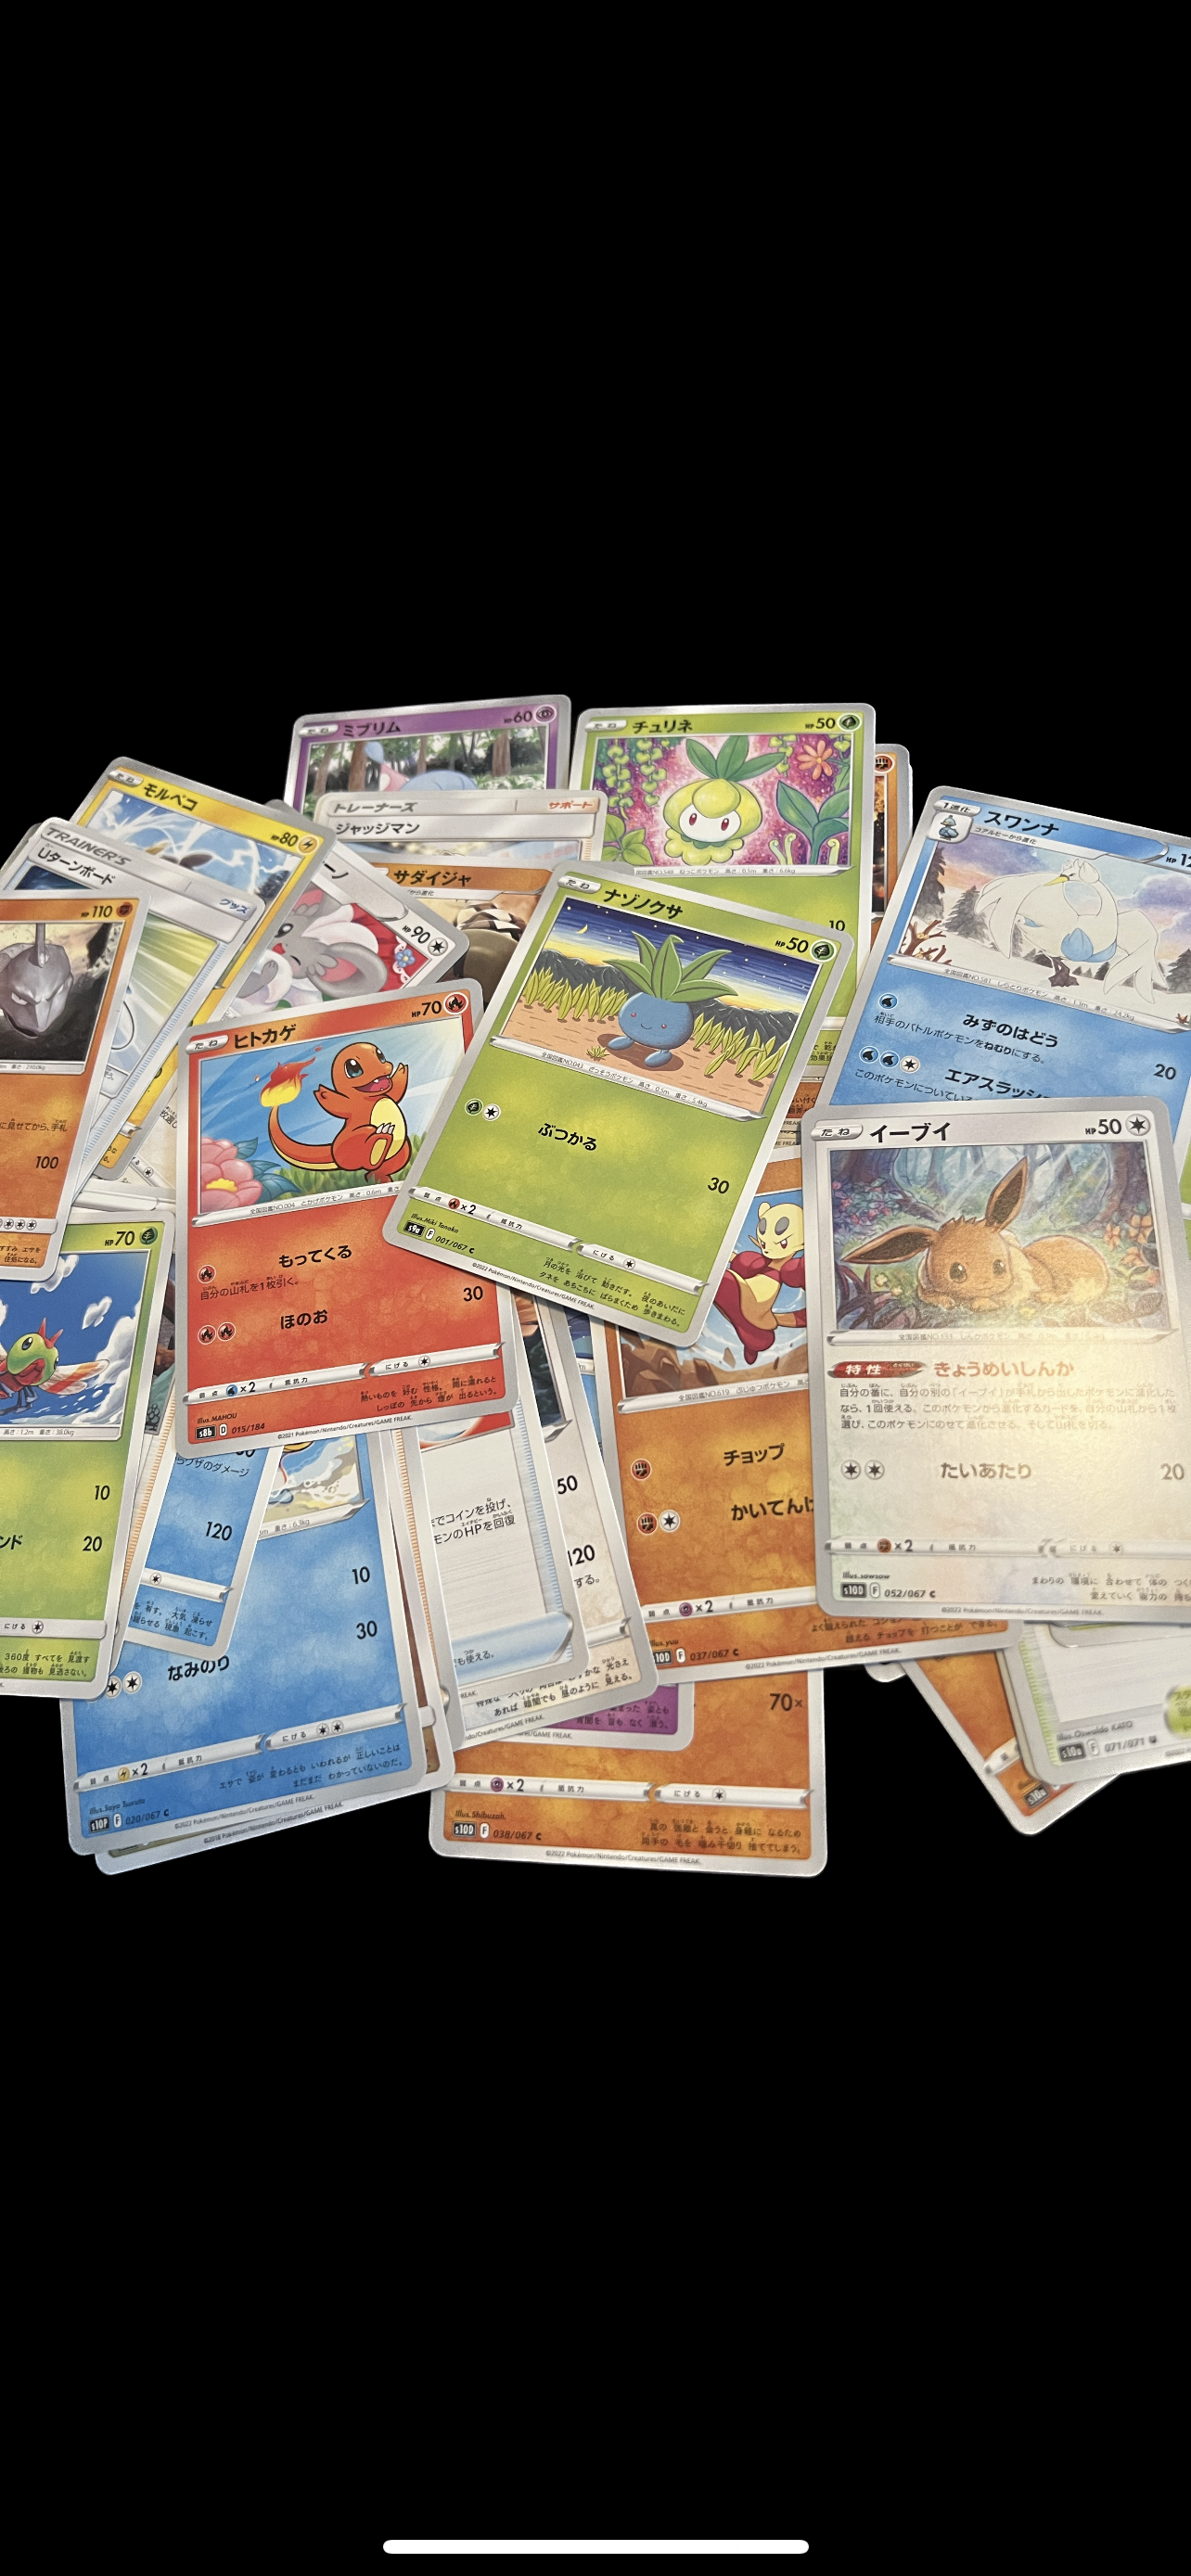 25 Japanese Pokémon Cards